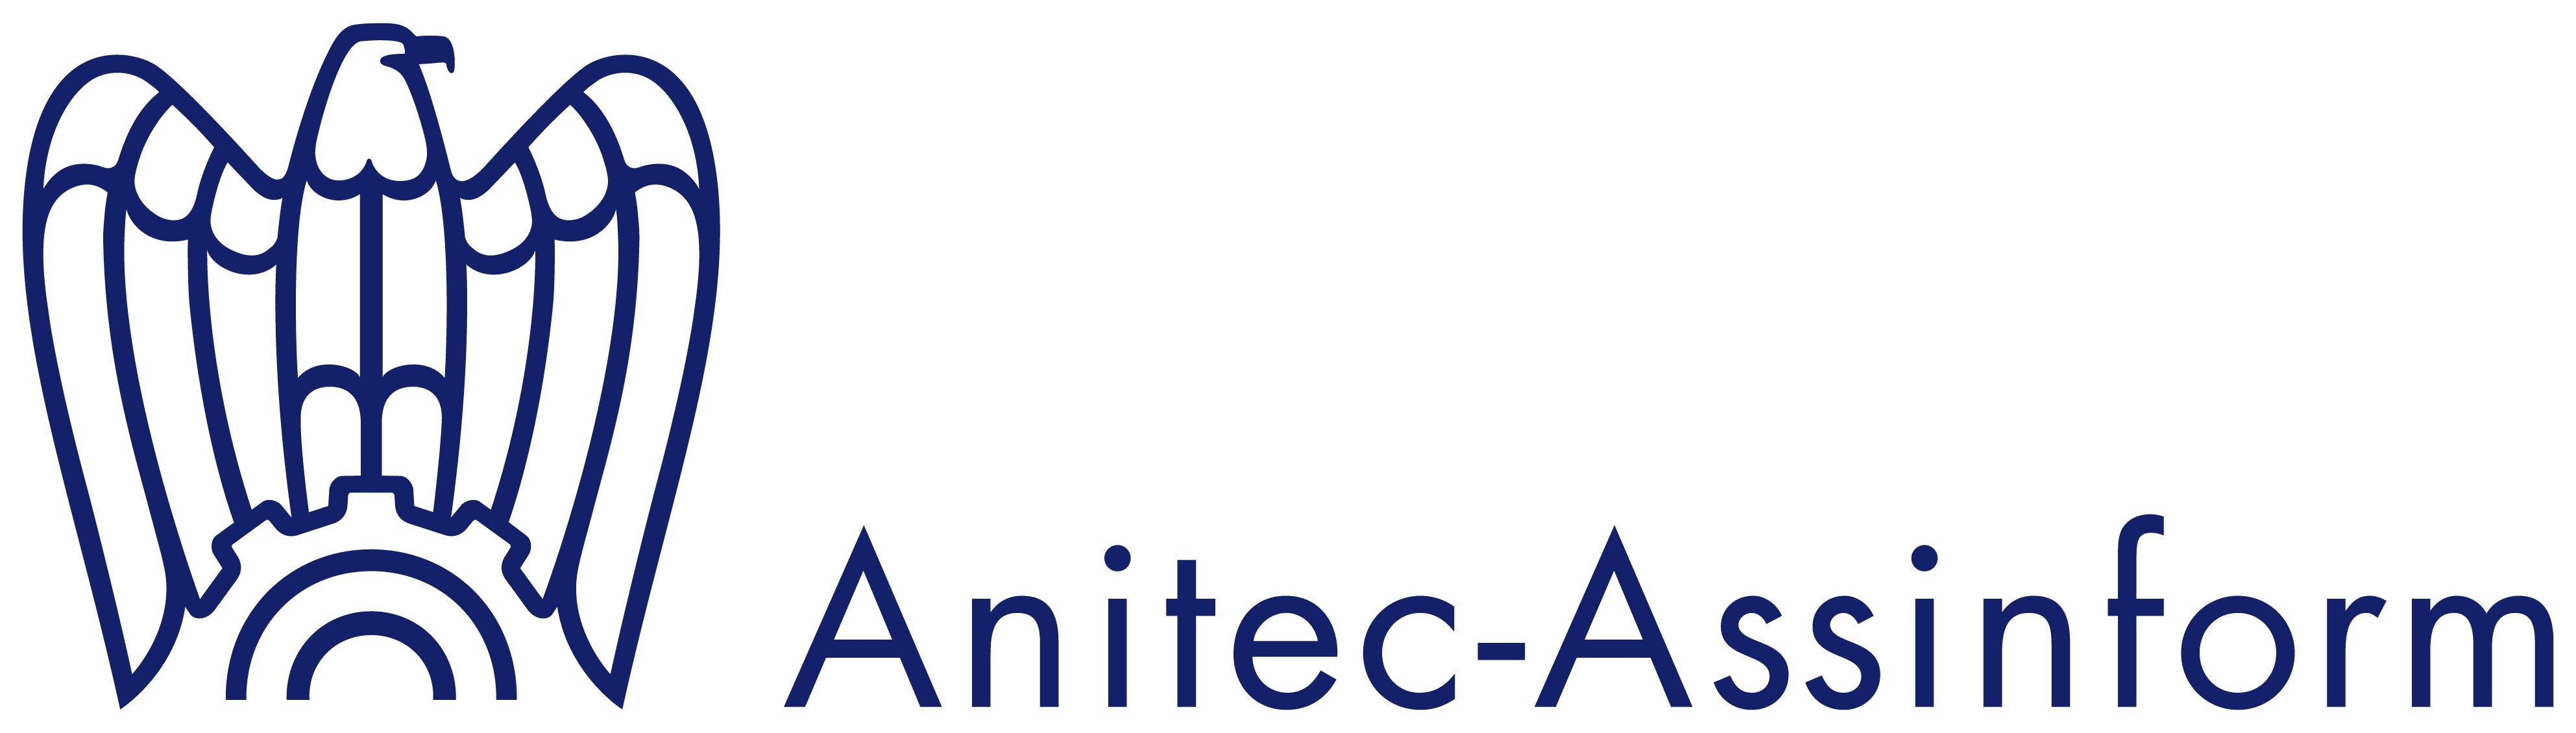 Anitec-Assinform (Associazione Italiana per l’Information and Communication Technology) logo